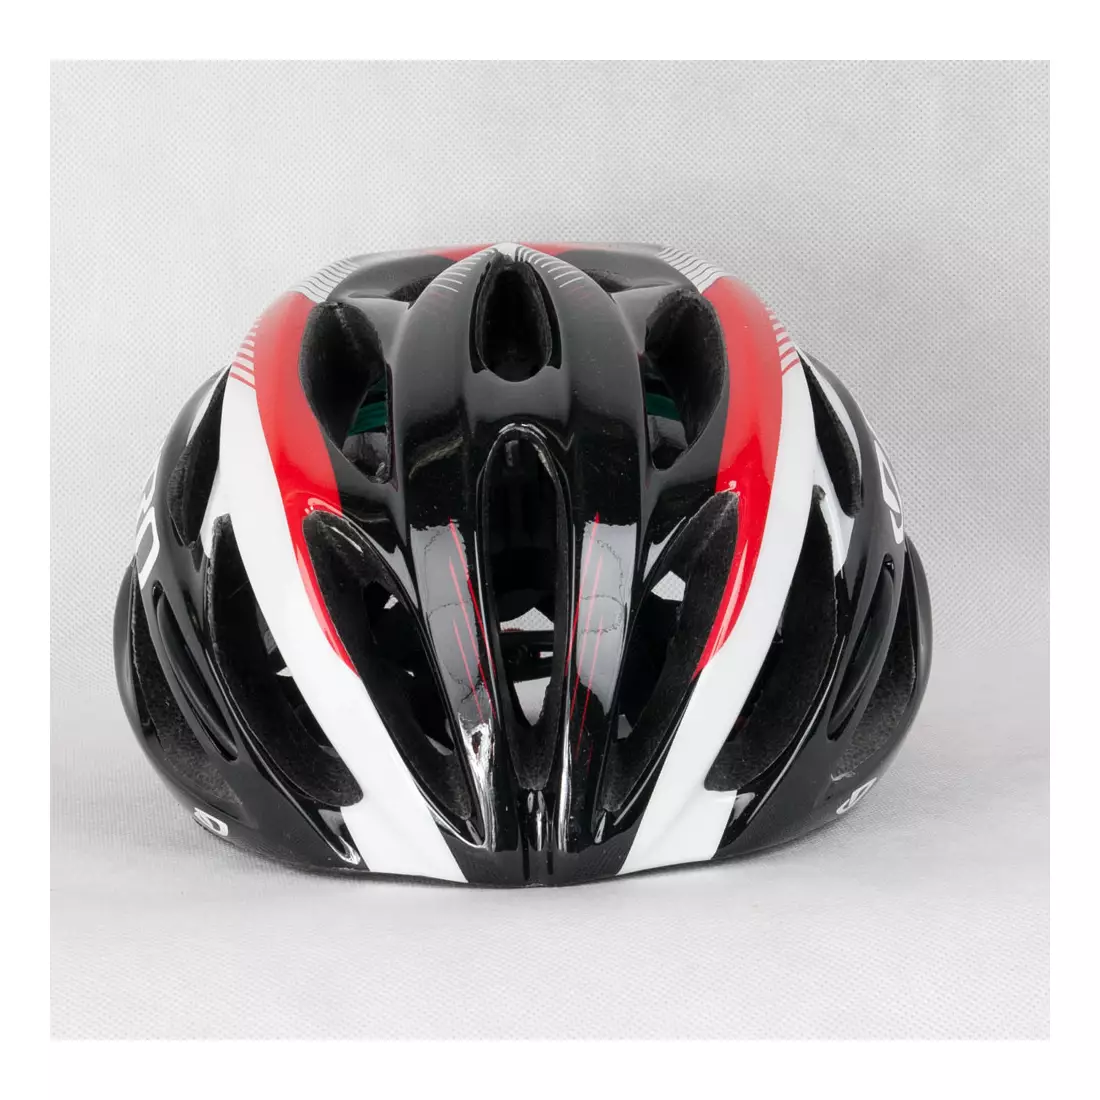 GIRO SAROS - bicycle and road helmet